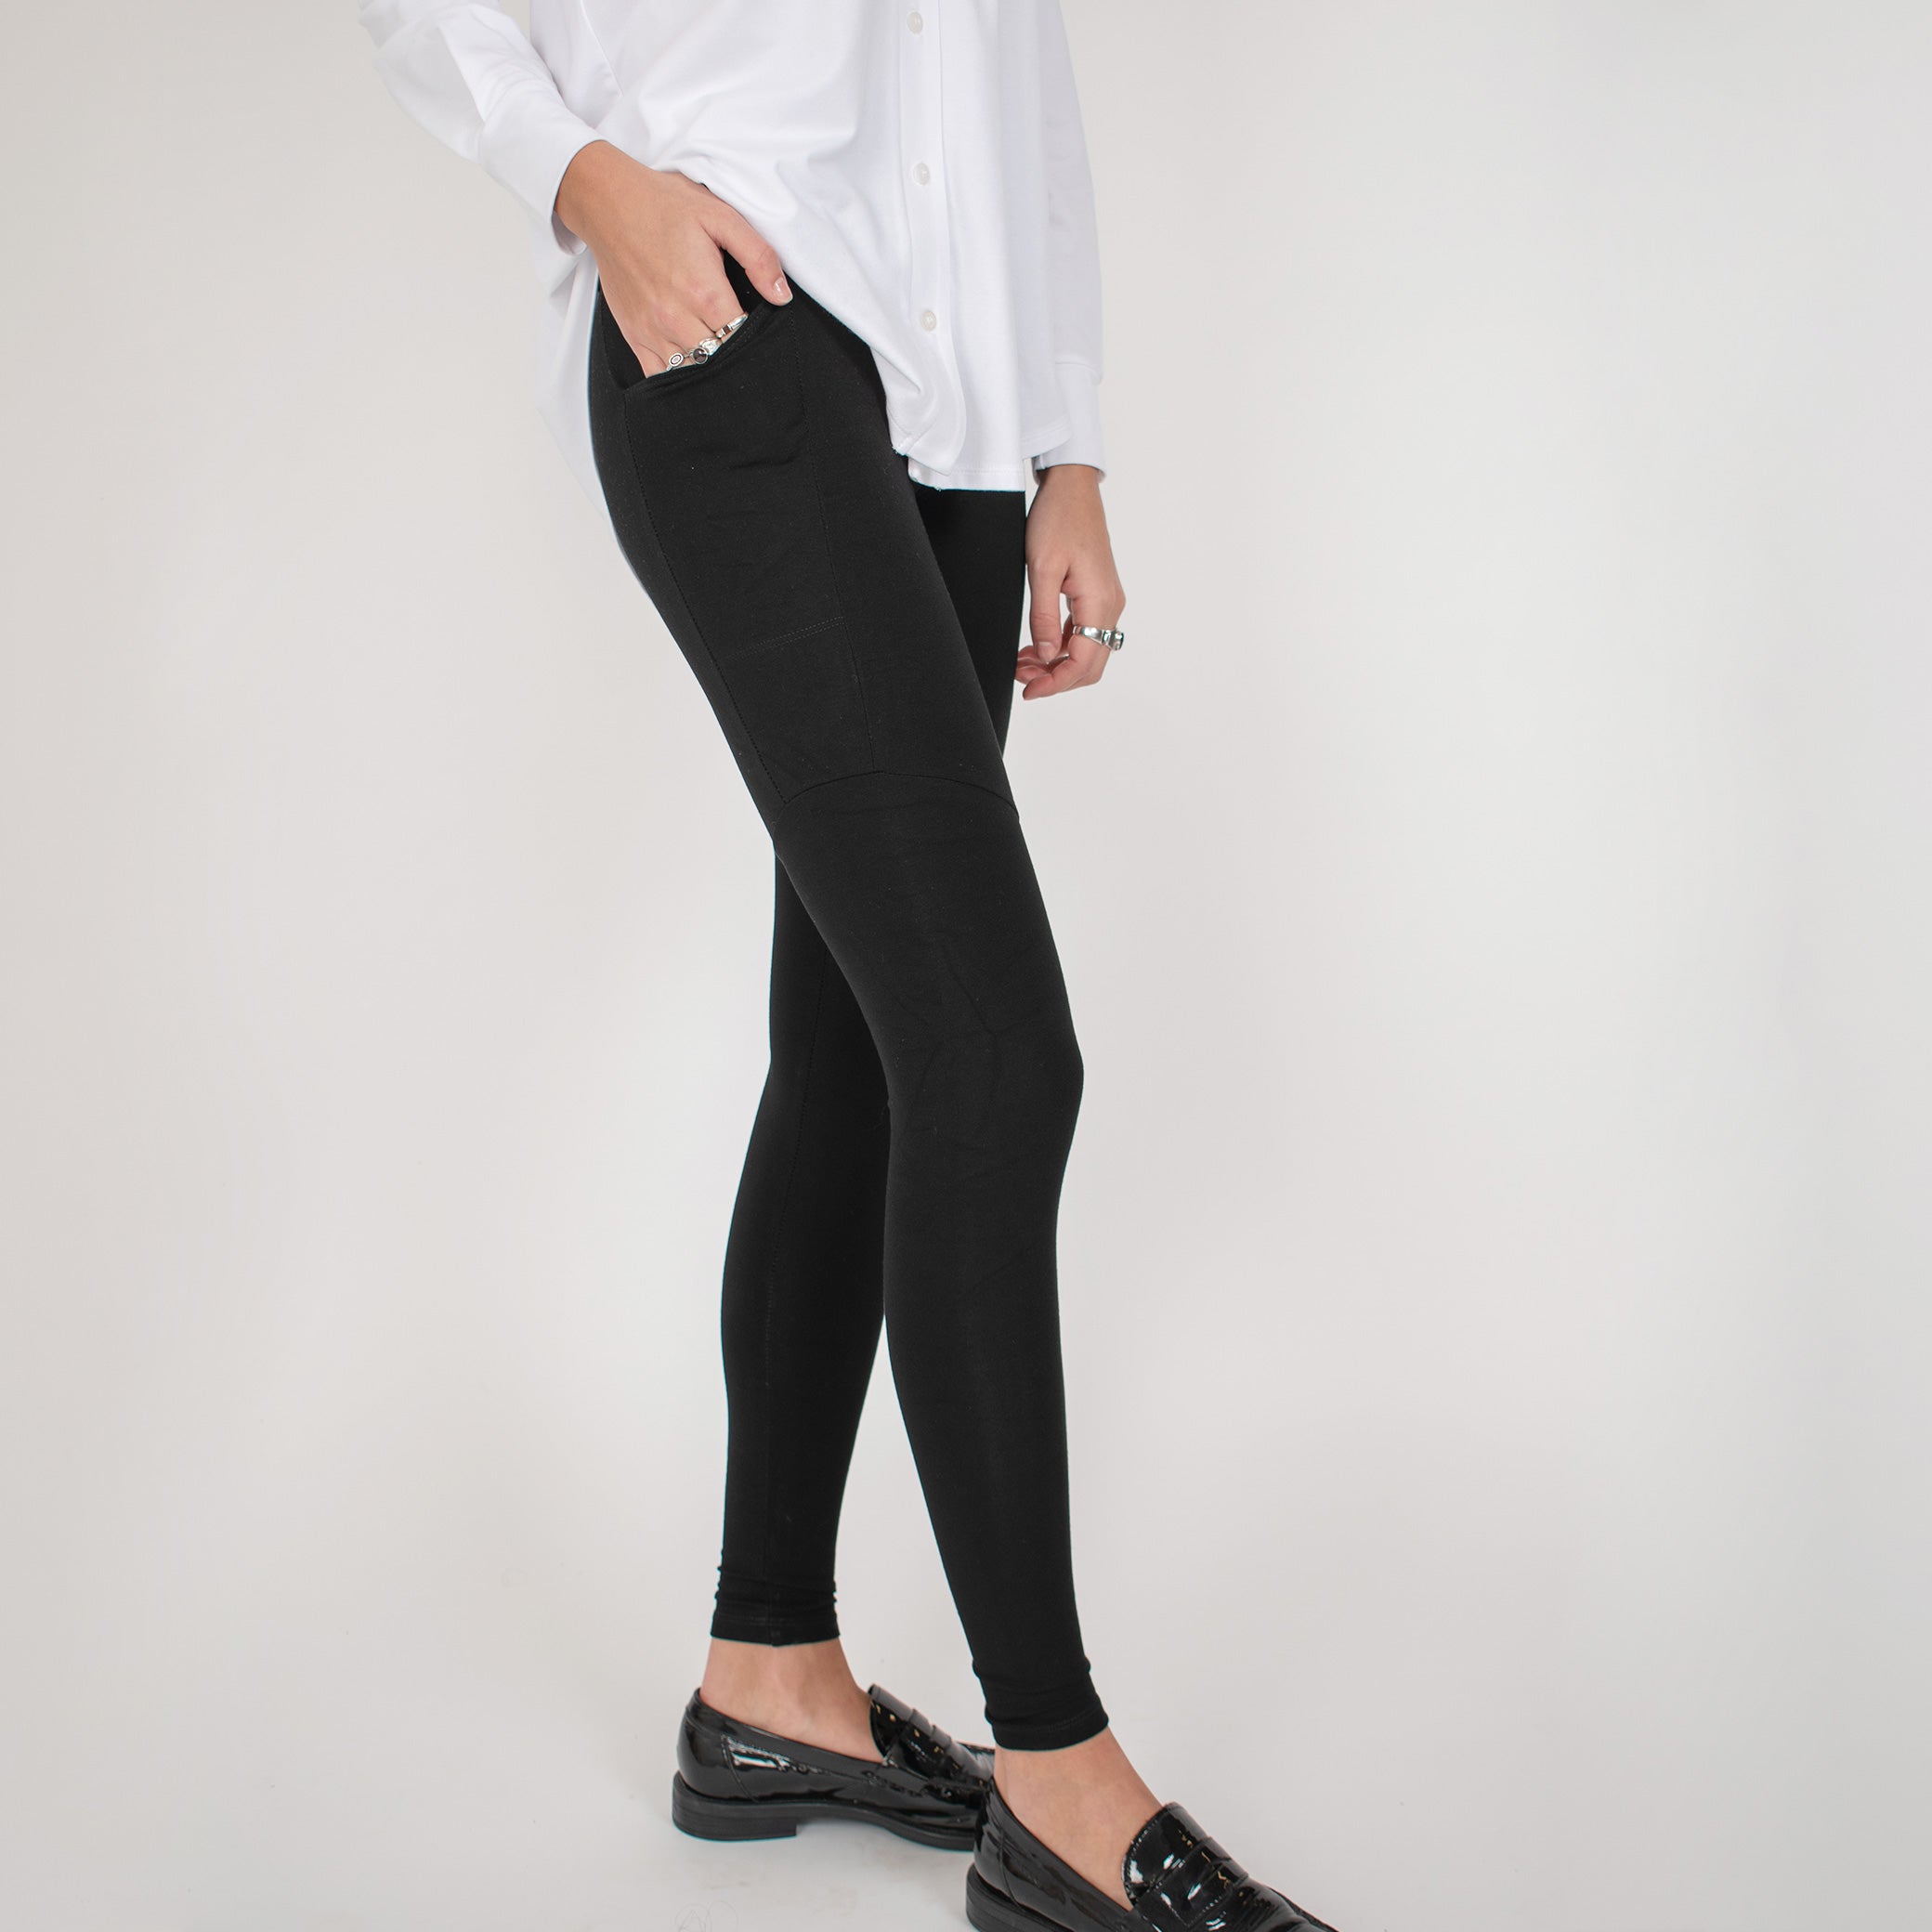 Womens Clothing Petite Black Full Length Jersey Leggings - China